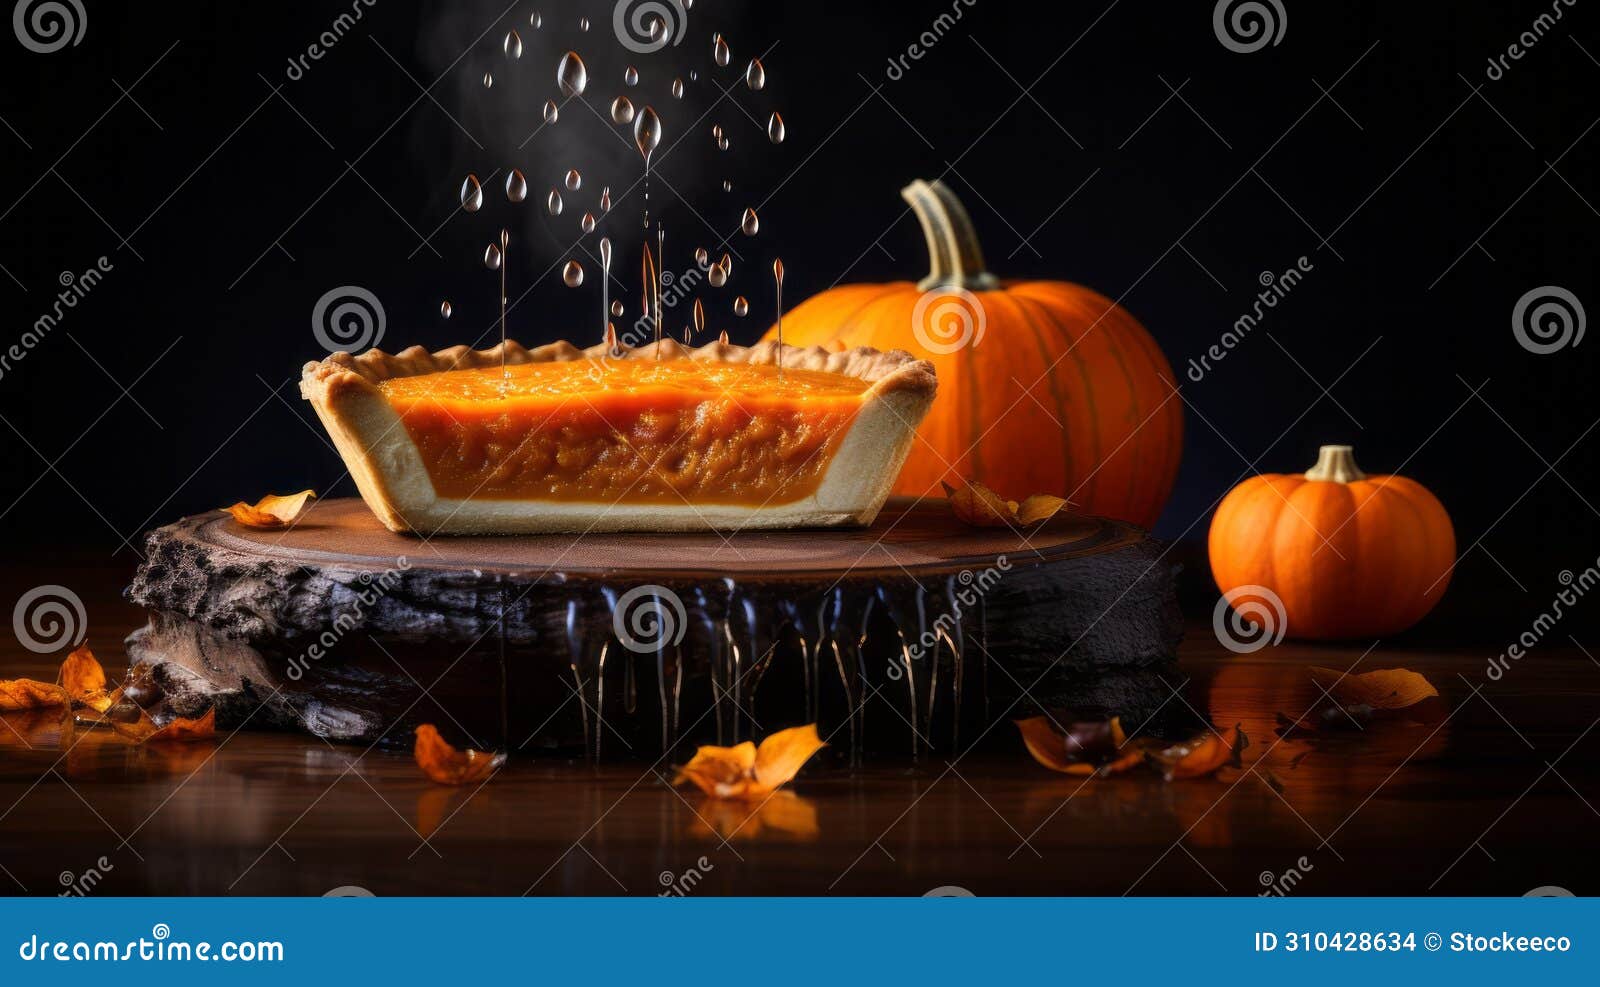 immersive pumpkin pie artwork inspired by olivier ledroit, miki asai, and herve guibert